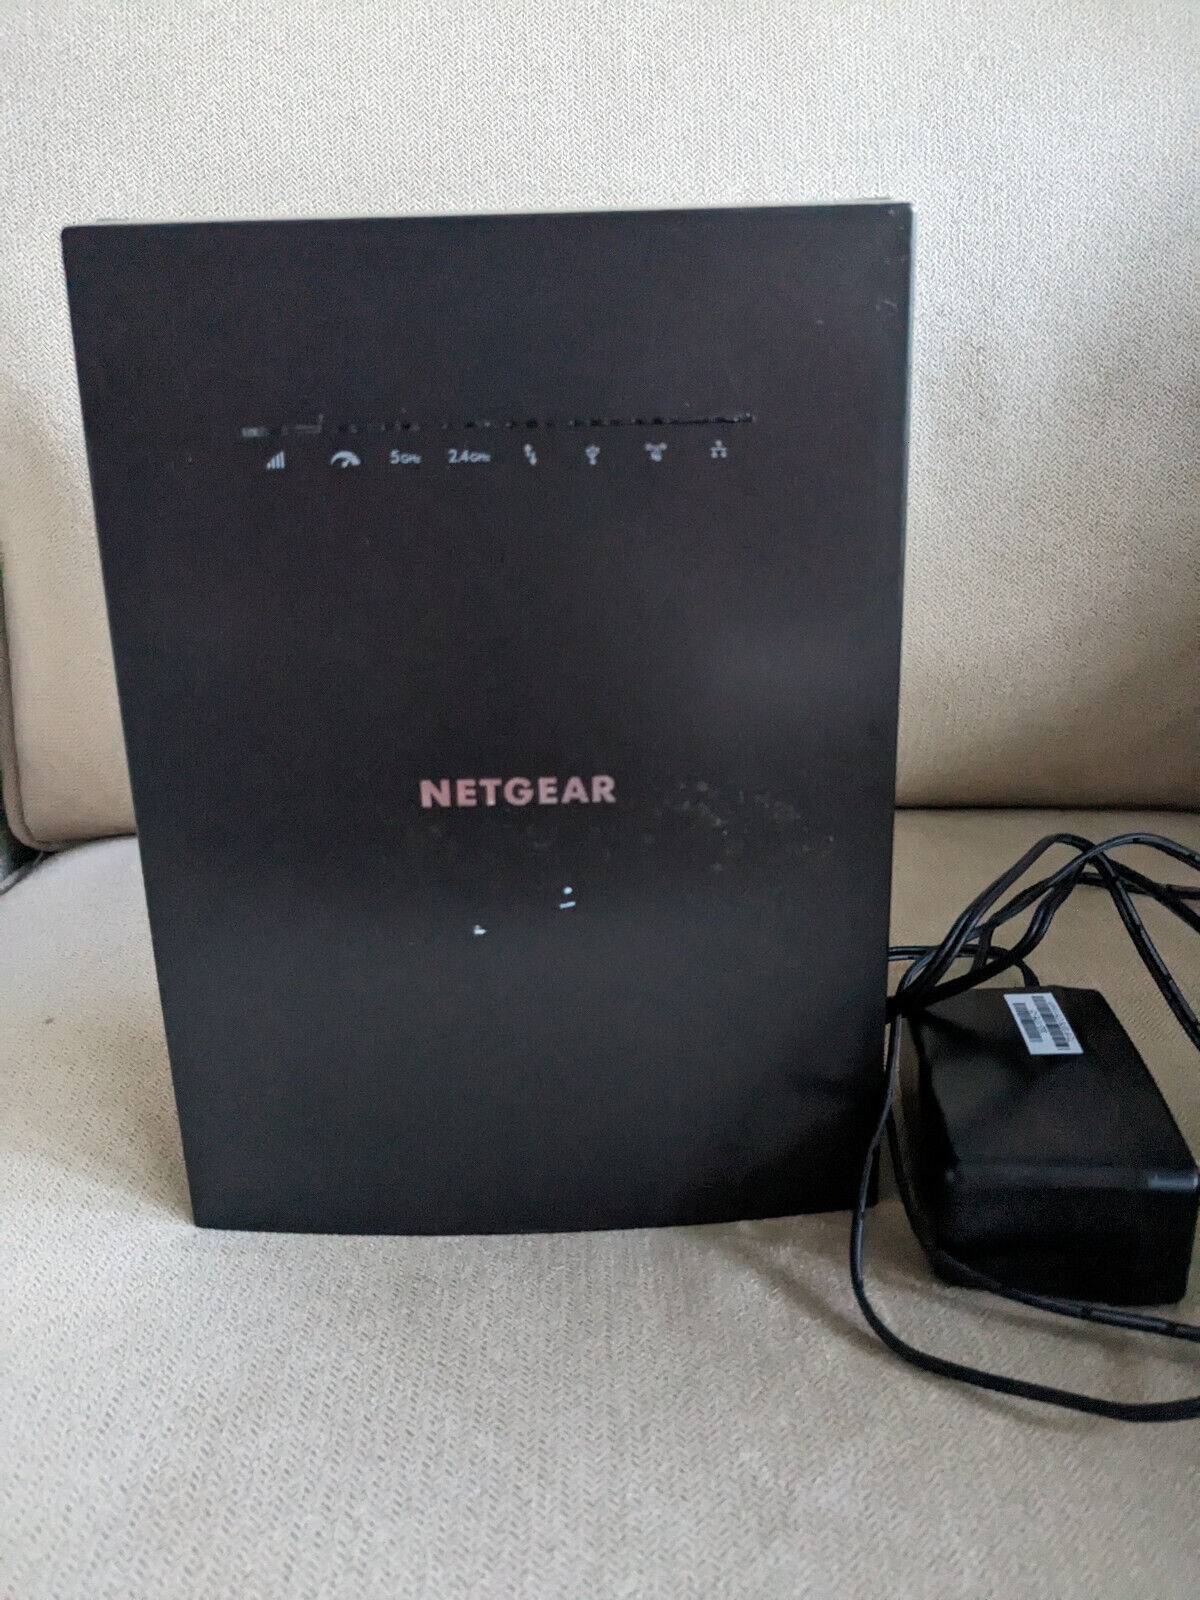 NETGEAR Nighthawk AC3000 EX8000 X6X Tri-band Wi-Fi Range Extender - $69.99